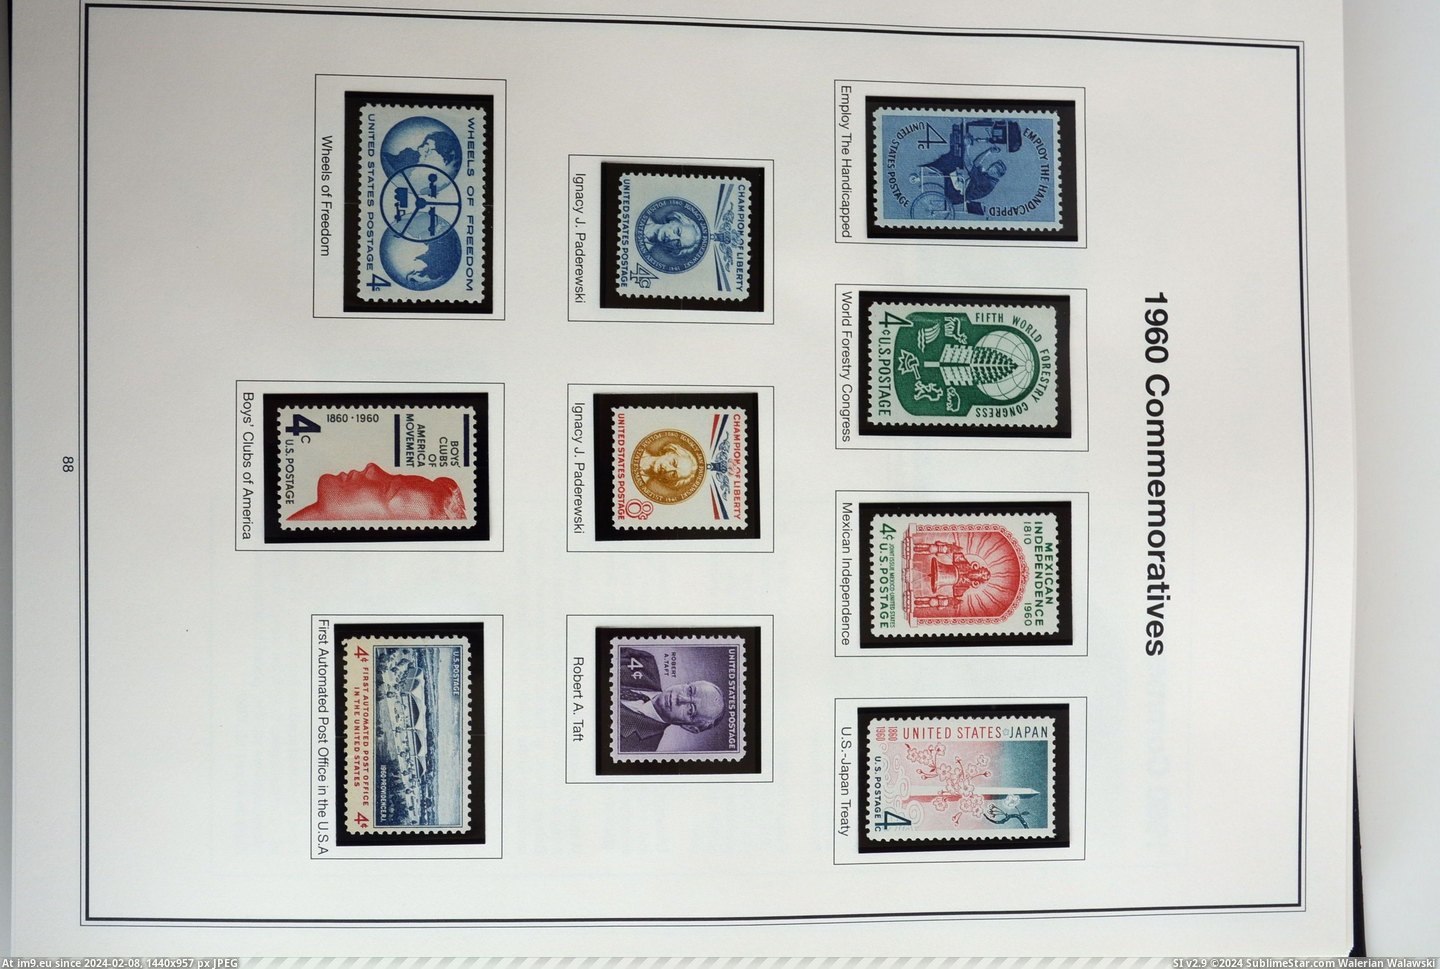  #Dsc  DSC_0847 Pic. (Image of album Stamp Covers))